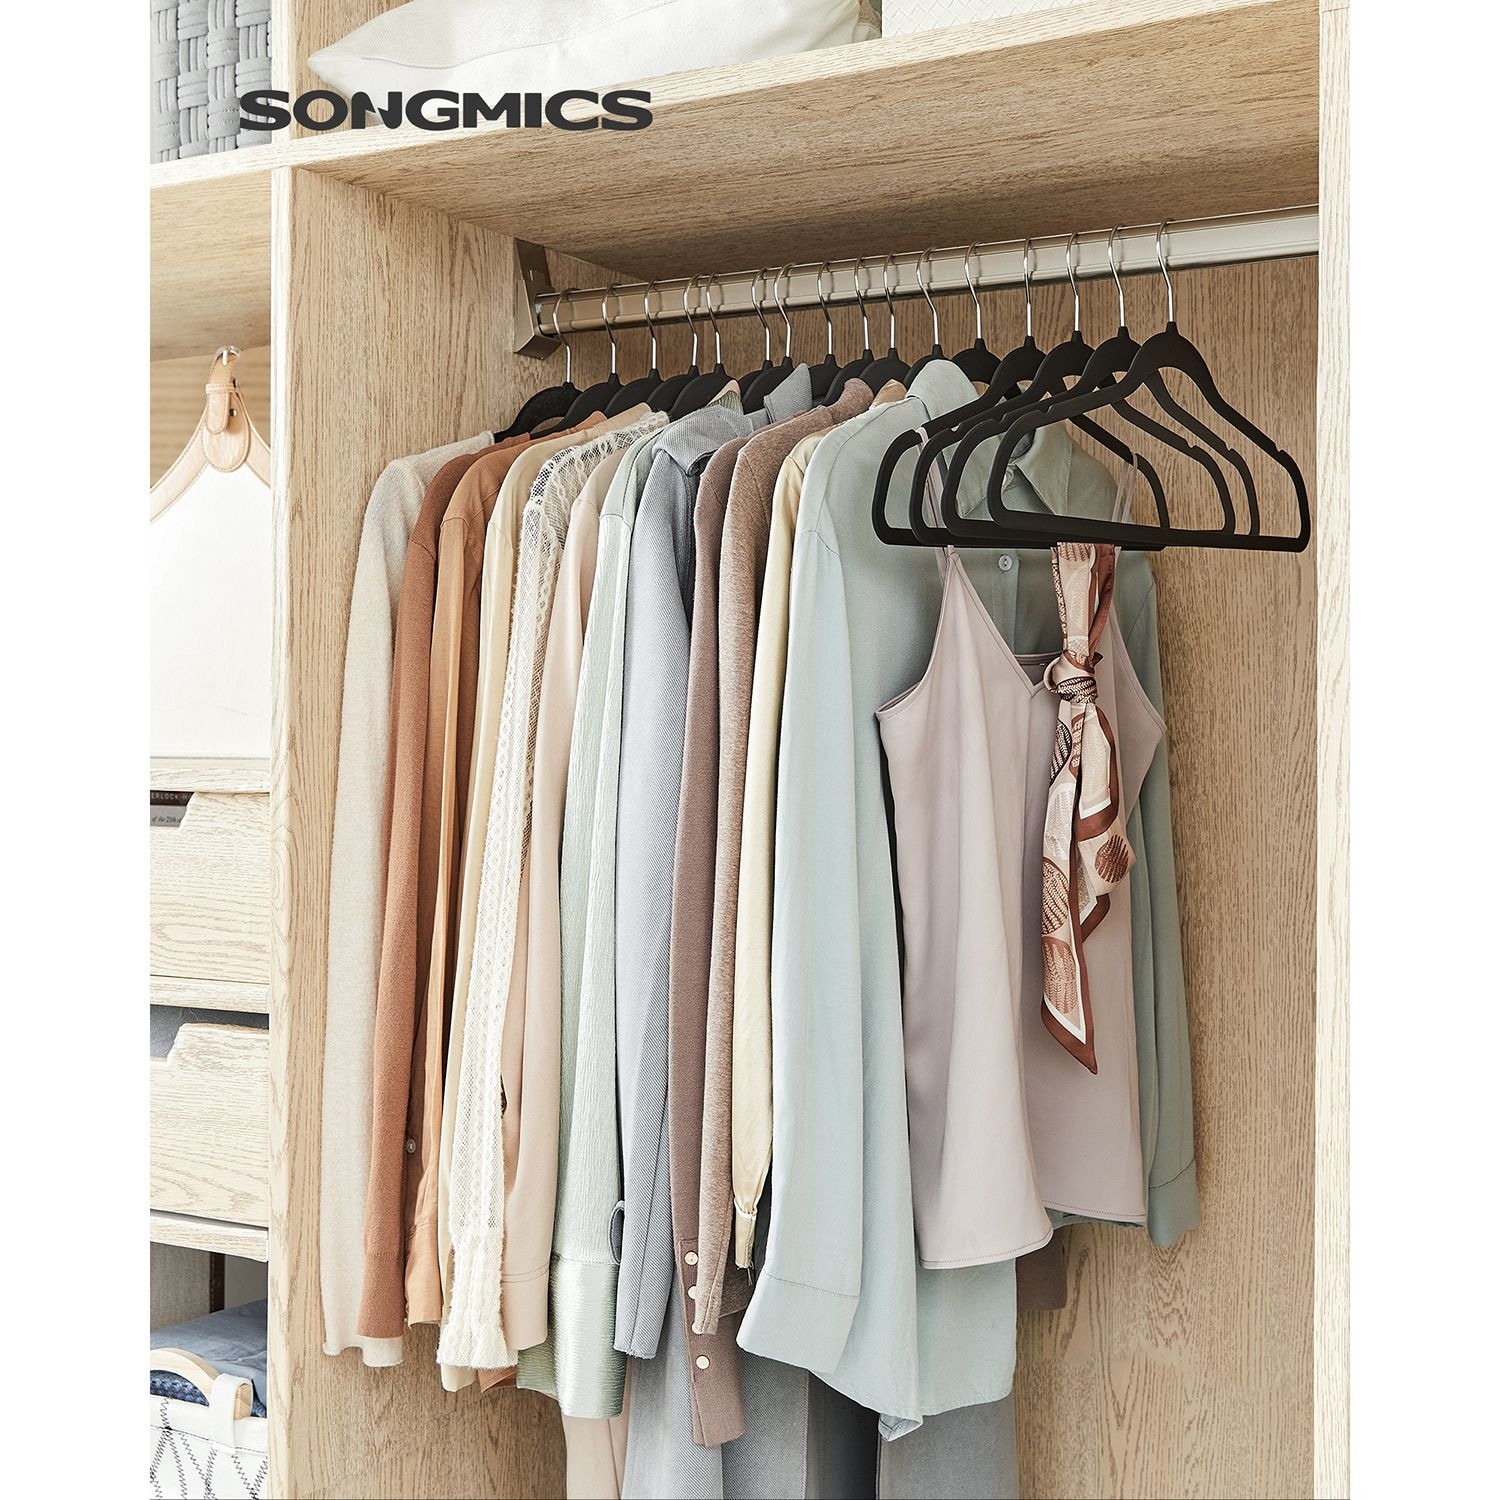 SONGMICS Pack of 50 Coat Hangers, Heavy Duty Plastic Hangers with Non-Slip  Design, Space-Saving